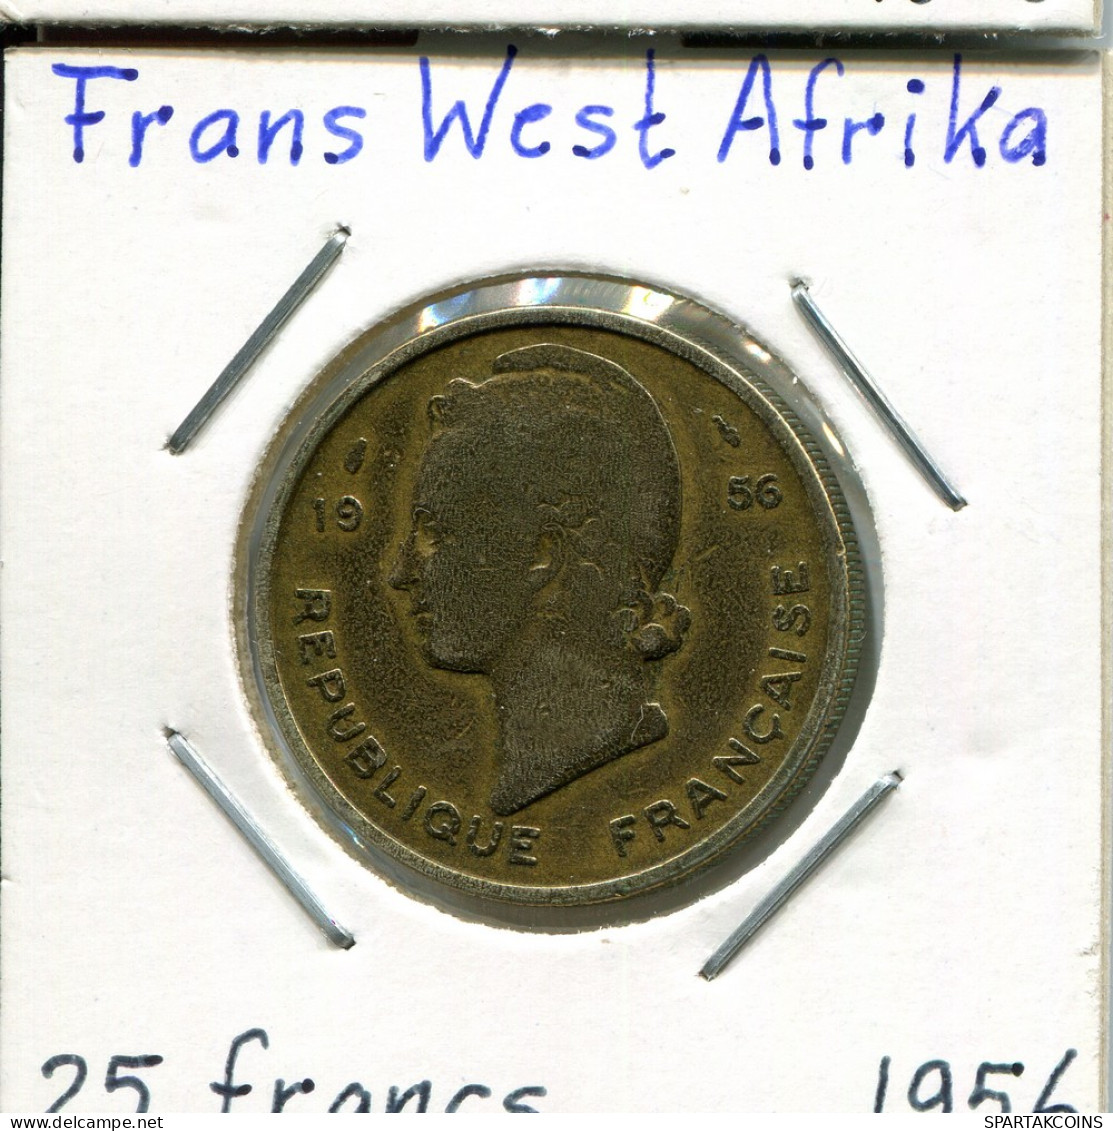 25 FRANCS 1956 Französisch WESTERN AFRICAN STATES Koloniale Münze #AM521.D - Frans-West-Afrika